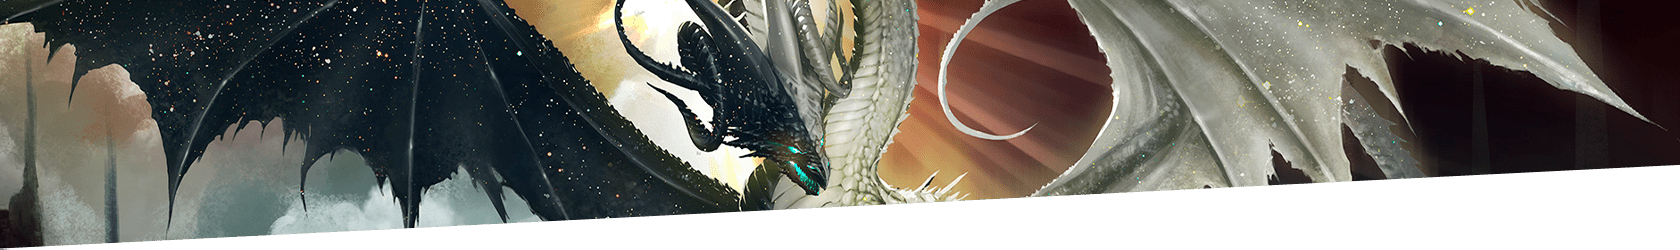 Dragon Shield Dual Mattes: Might, Valor, & Wisdom — Arcane Tinmen